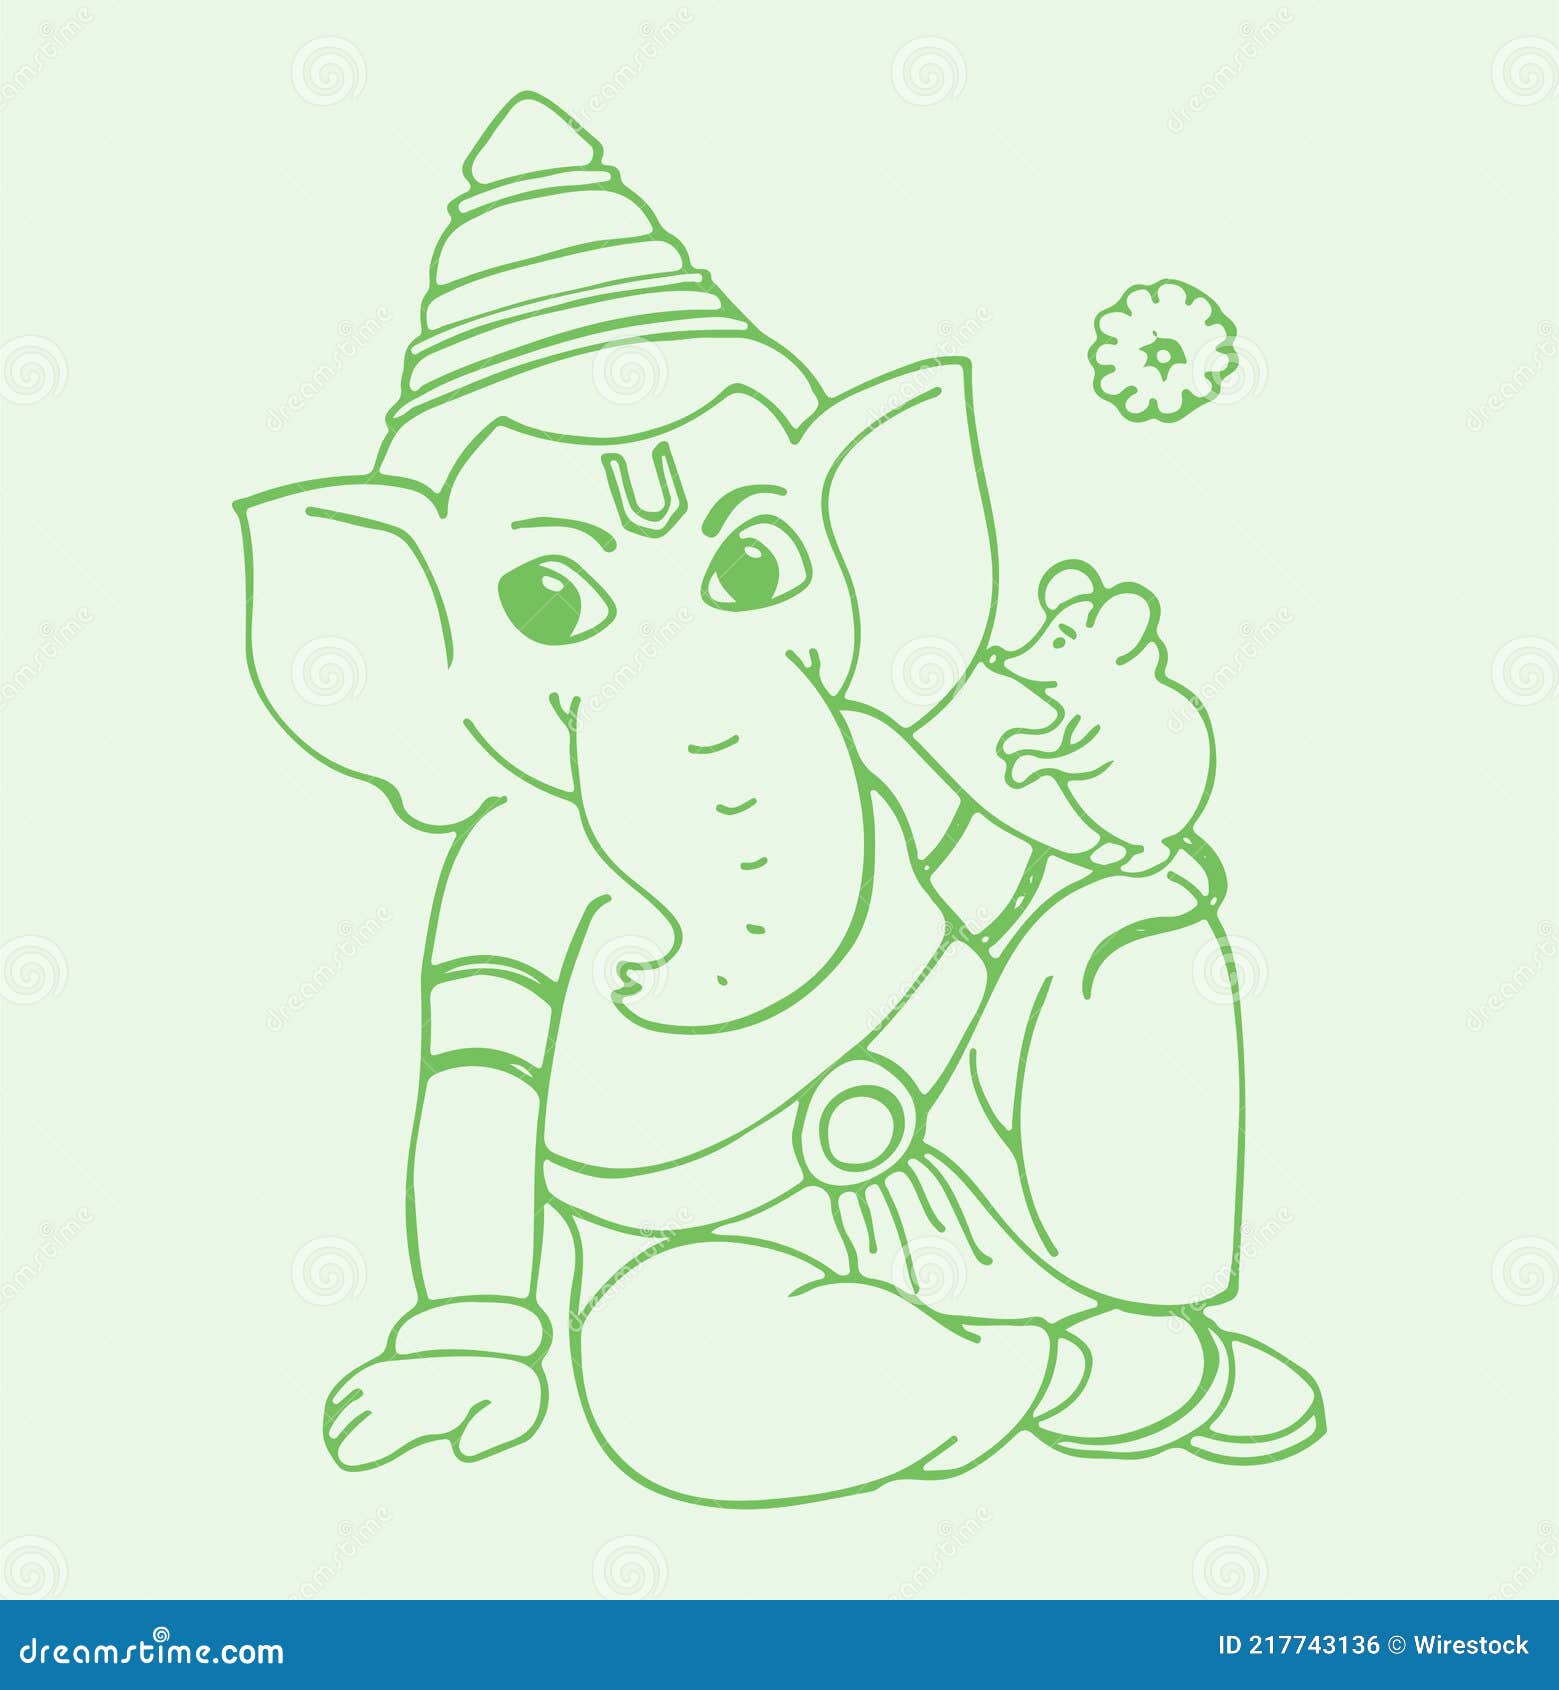 3,665 Cute Ganesha Images, Stock Photos & Vectors | Shutterstock